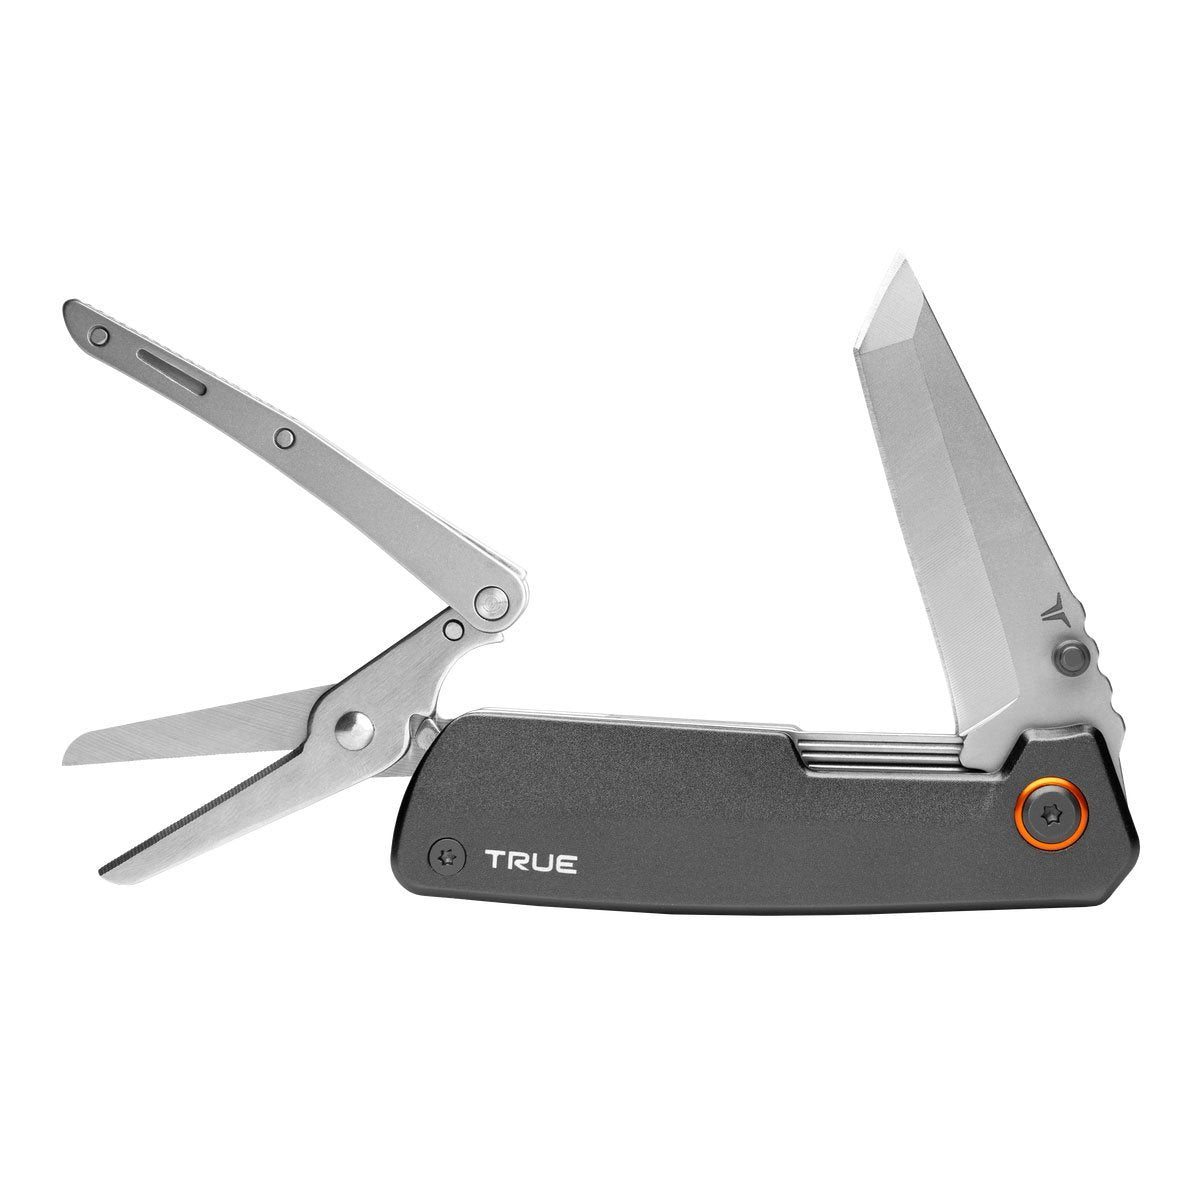 https://cdn.shopify.com/s/files/1/0081/2980/6402/products/dual-cutter-pocket-knife-scissors-459943.jpg?v=1636548090